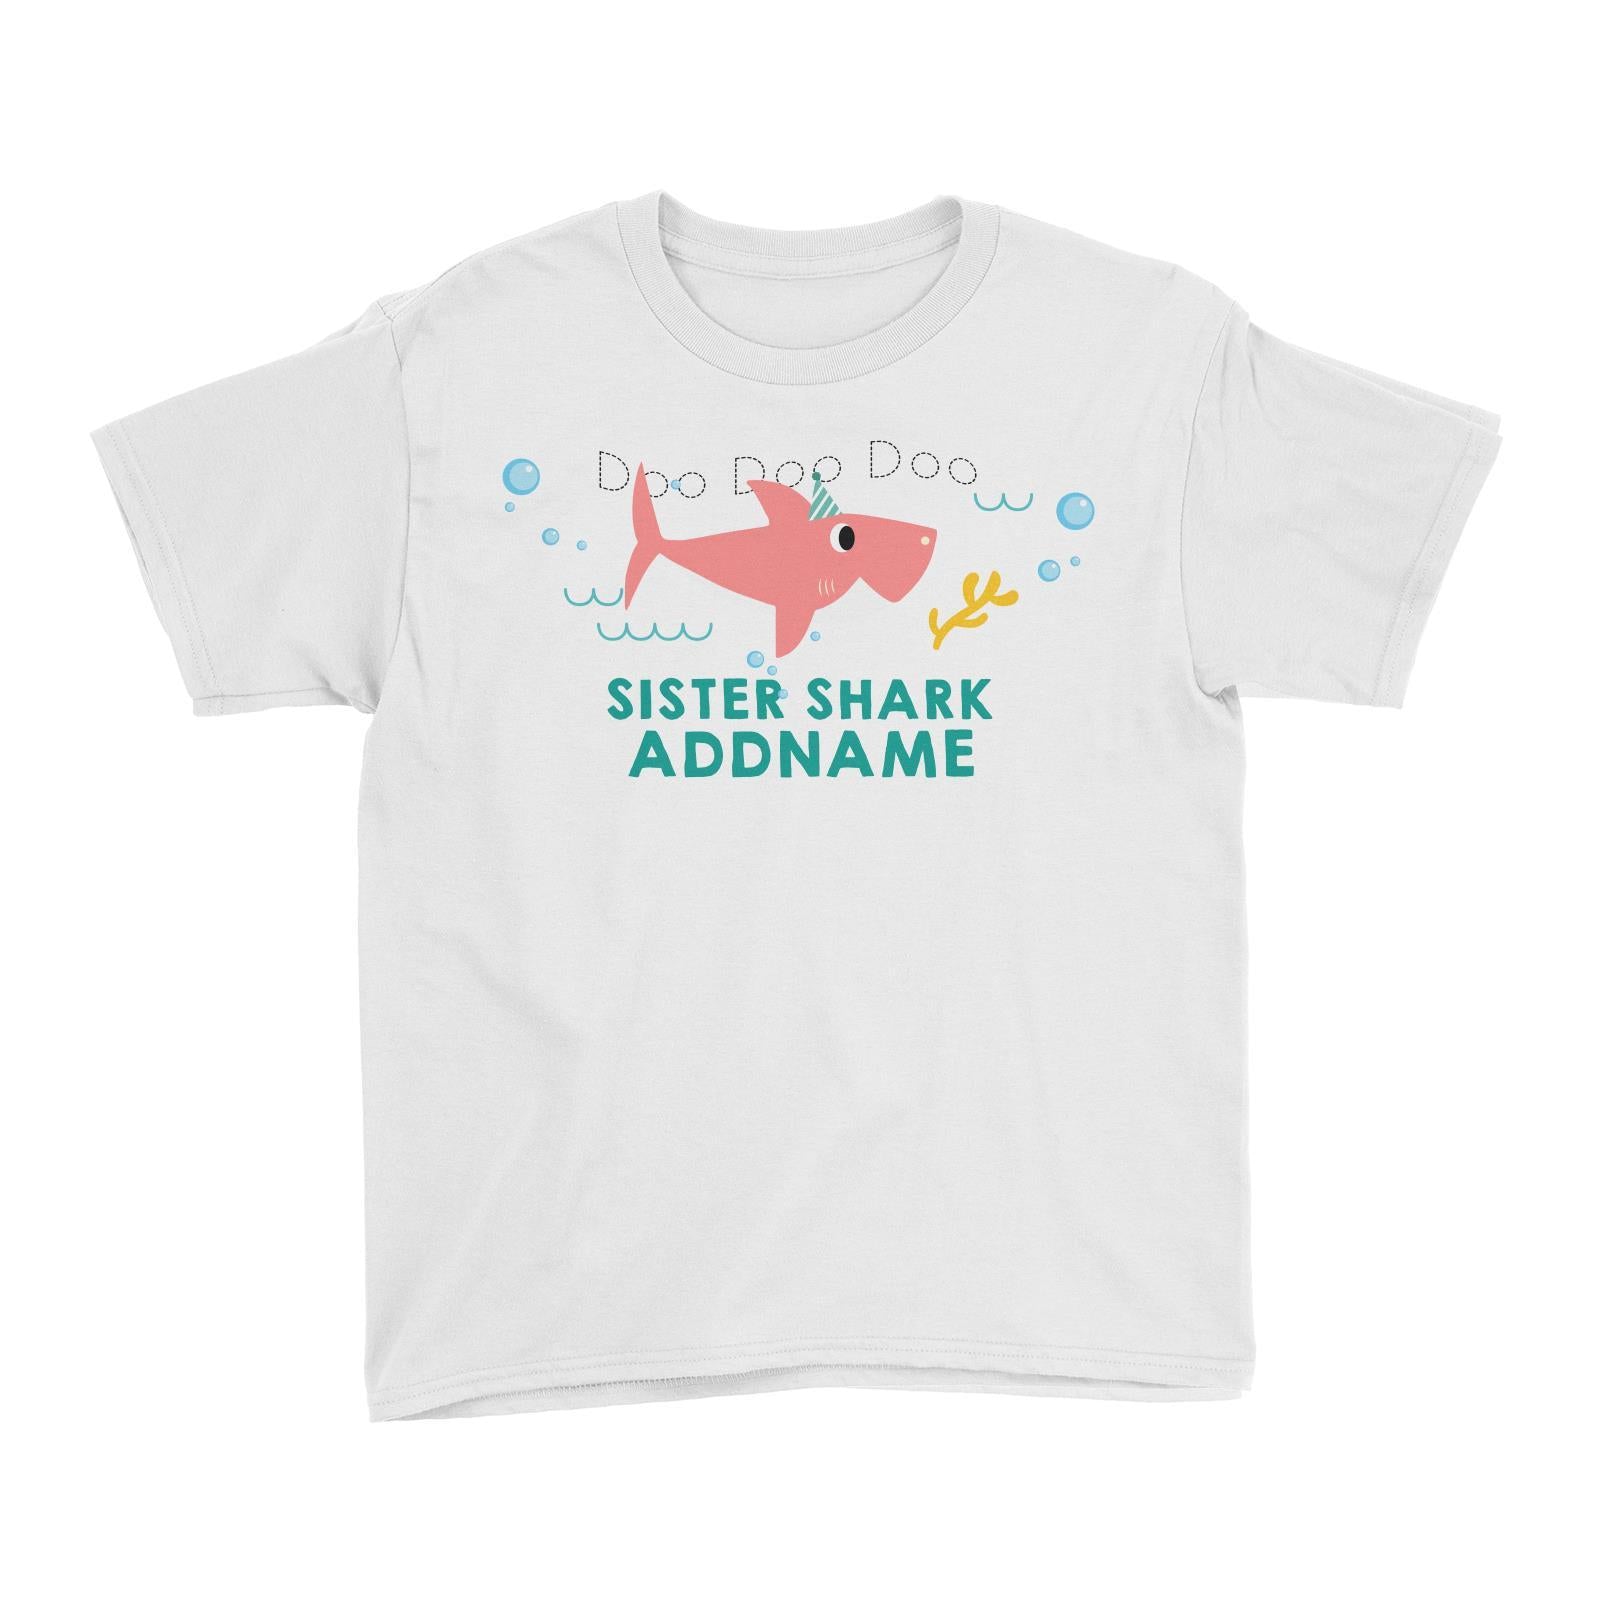 Sister Shark Birthday Theme Addname Kid's T-Shirt